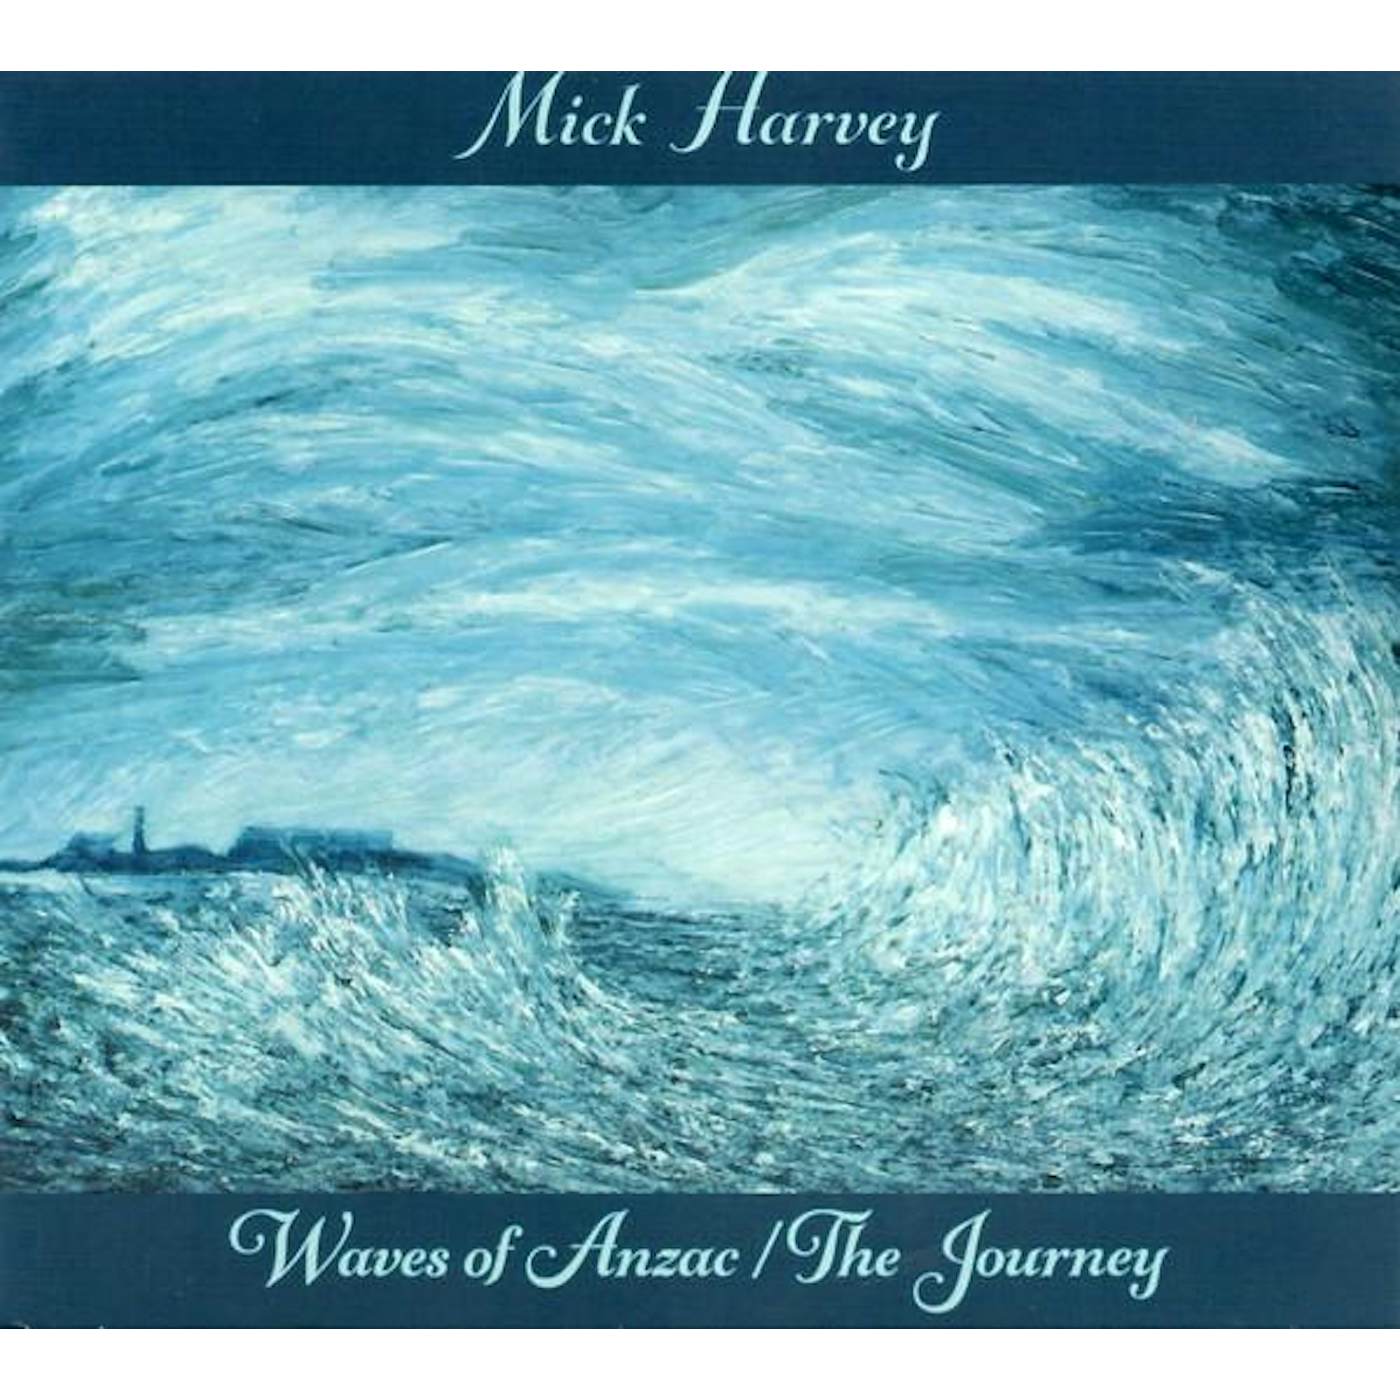 Mick Harvey WAVES OF ANZAC / THE JOURNEY CD